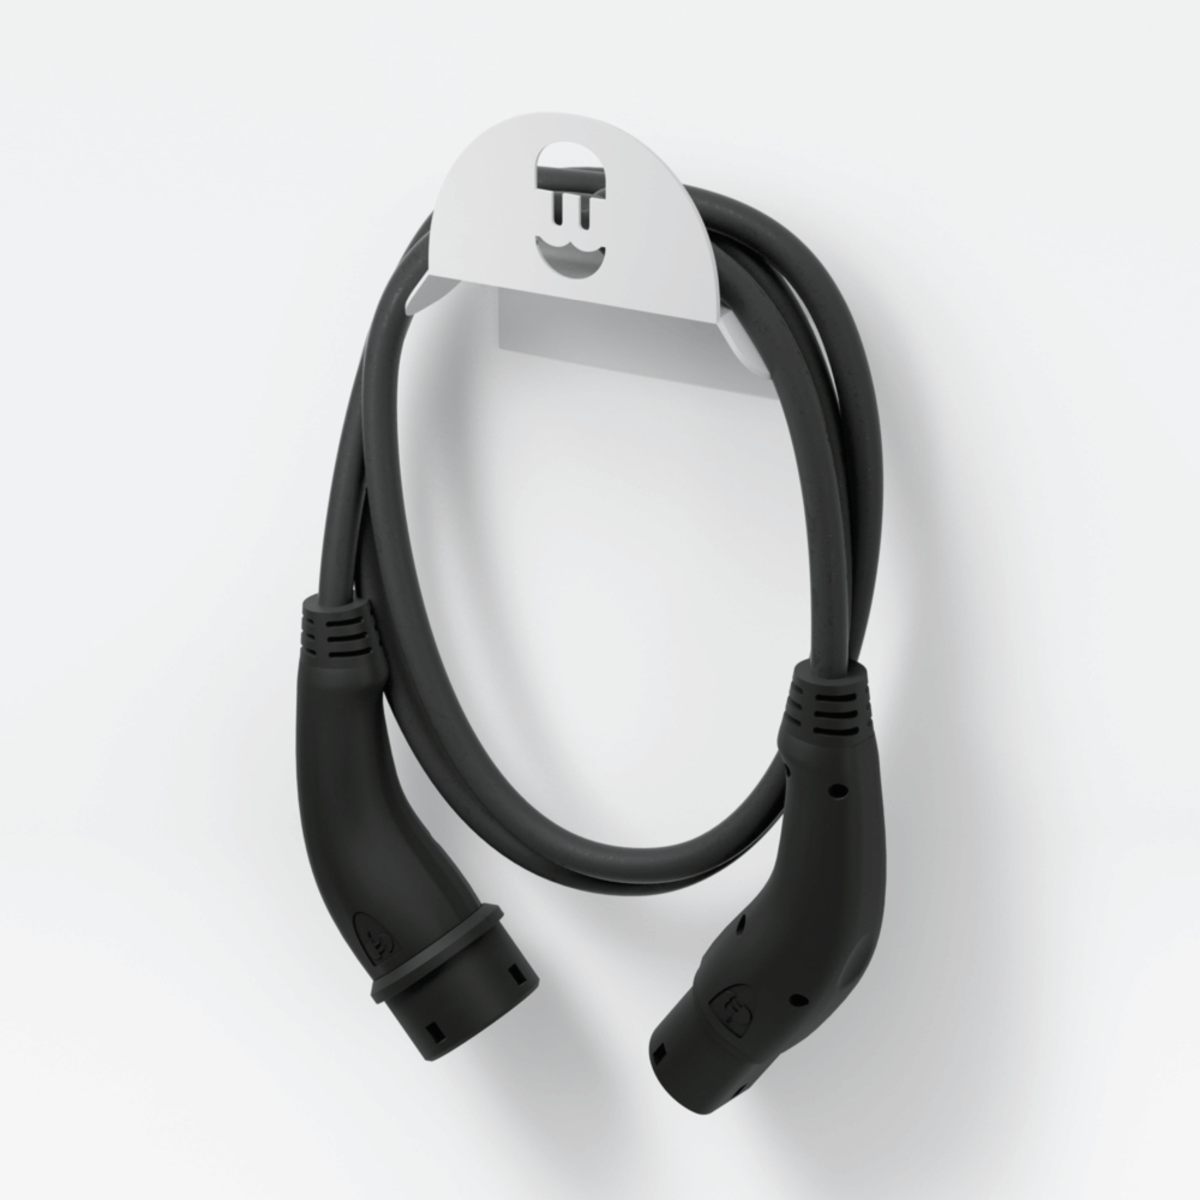 Wallbox - Cable Holder Metallic White/Black